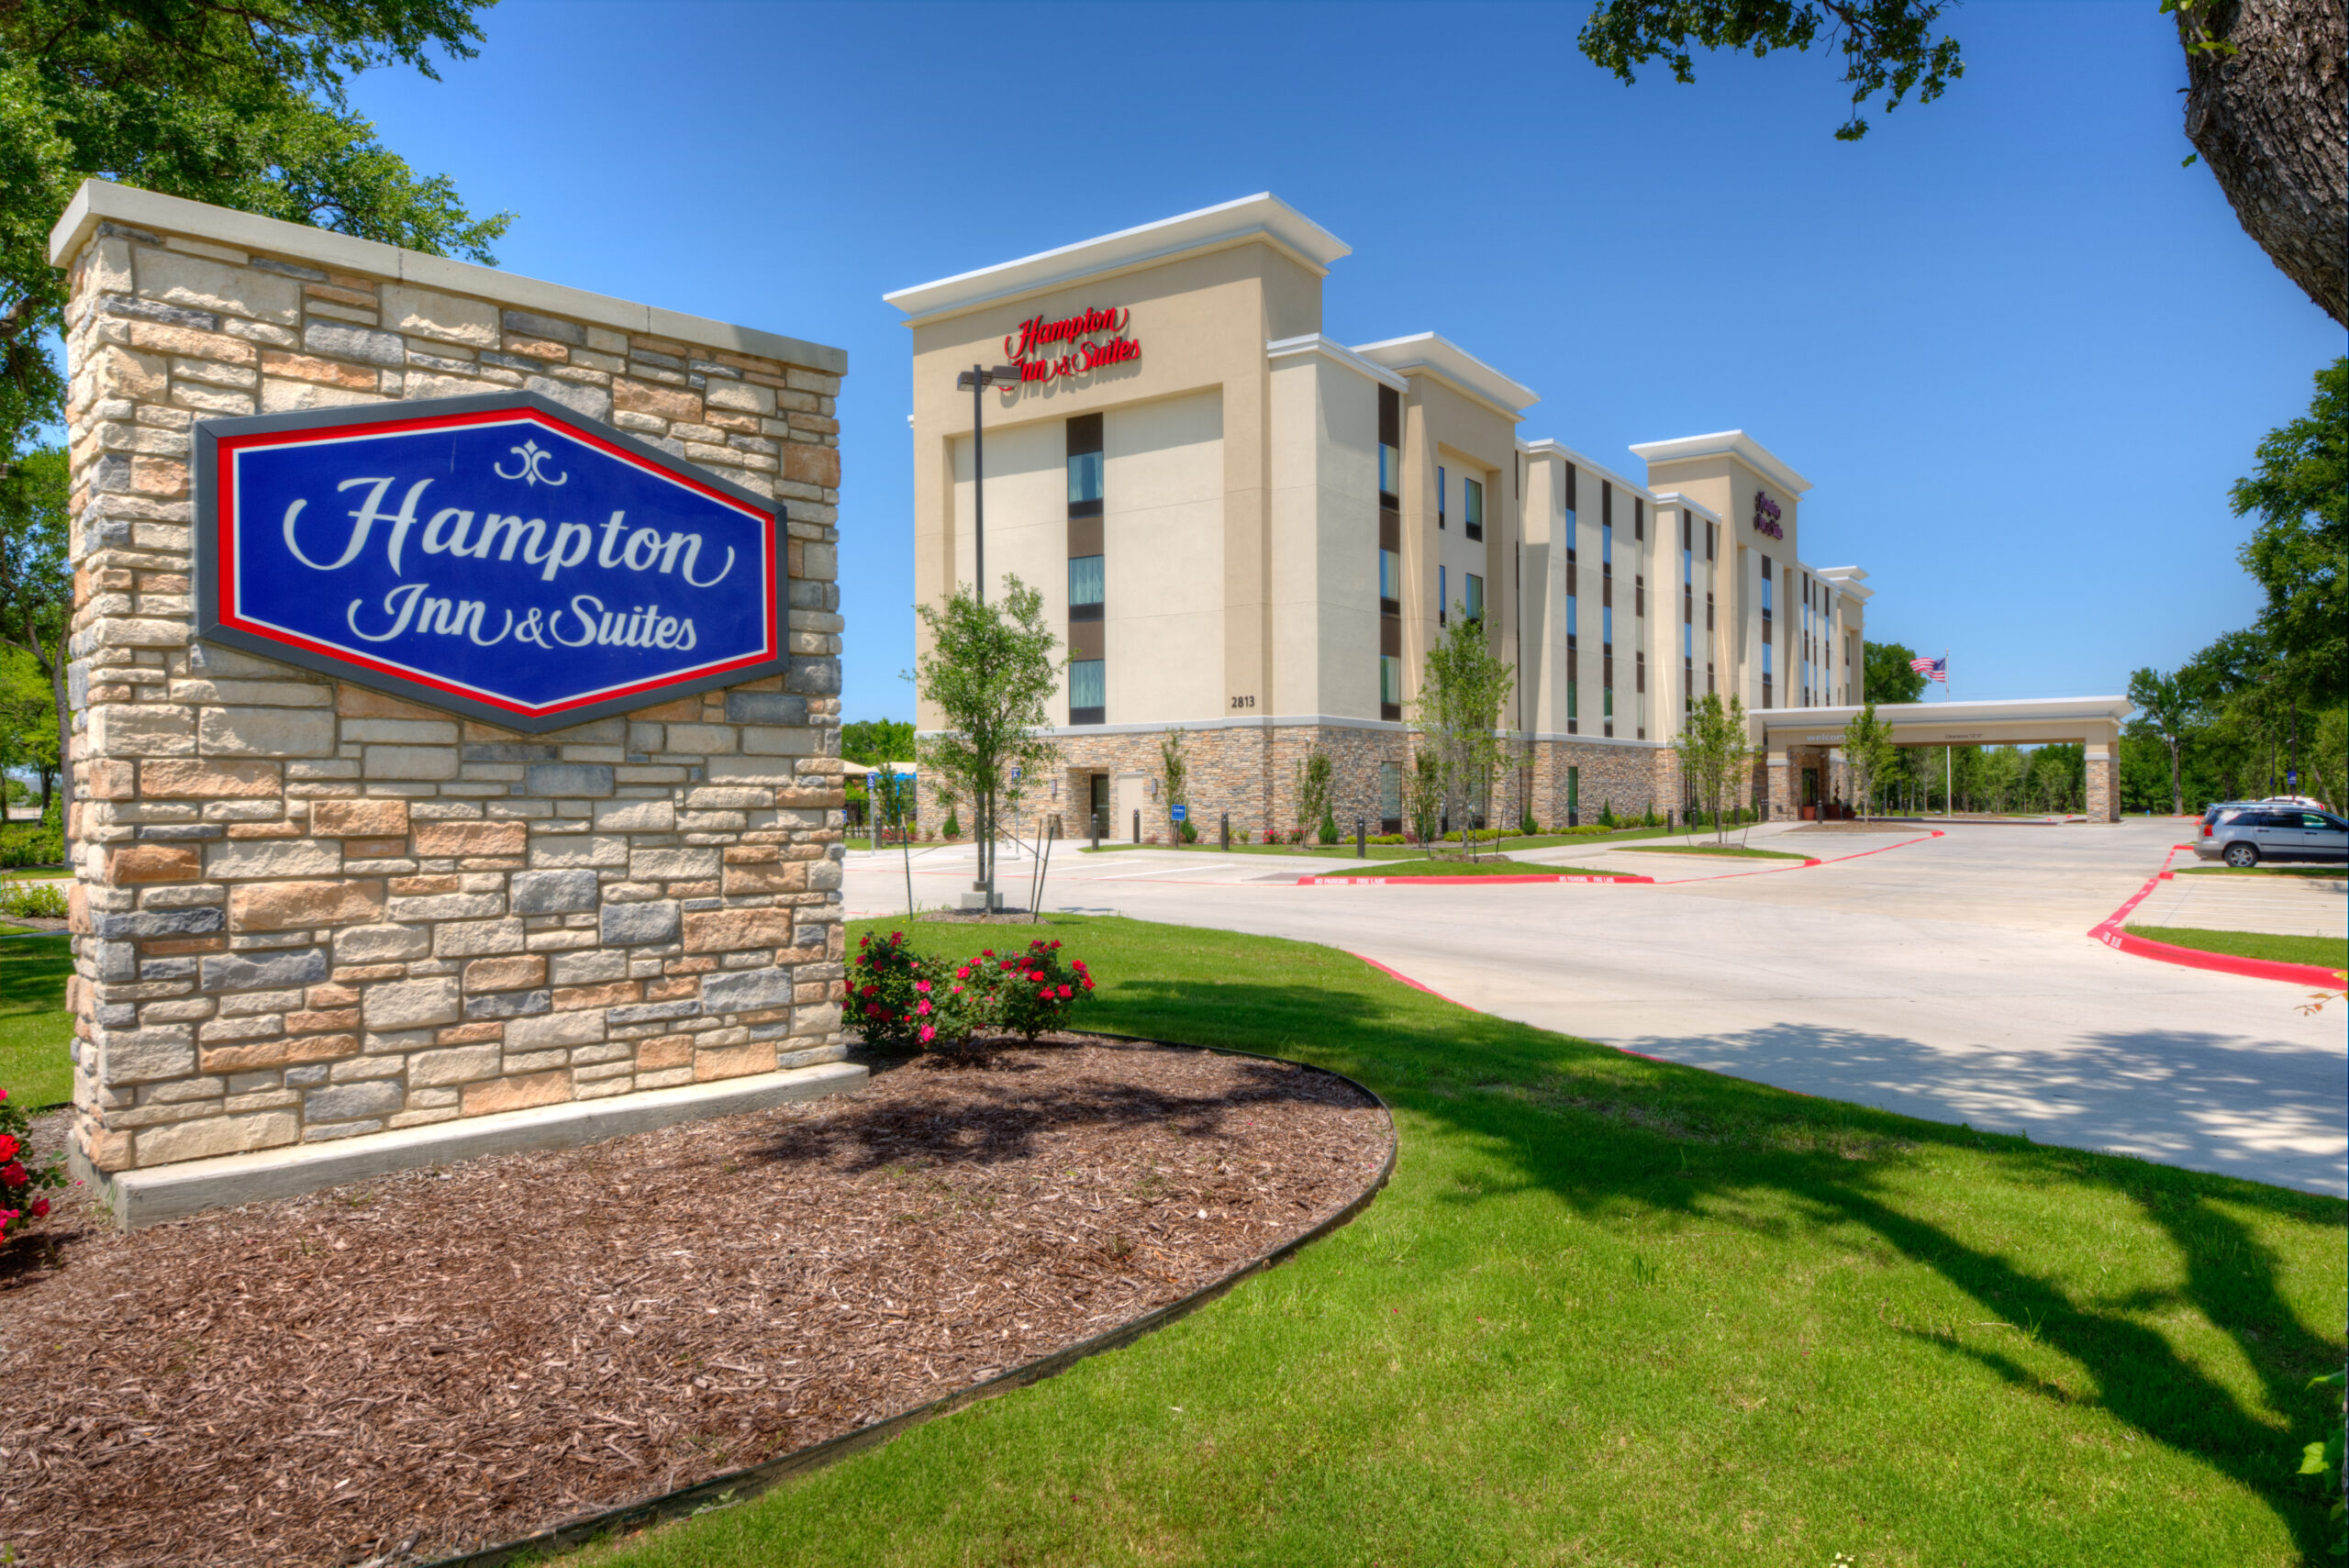 Hampton Inn & Suites Plano East exterior with street signage